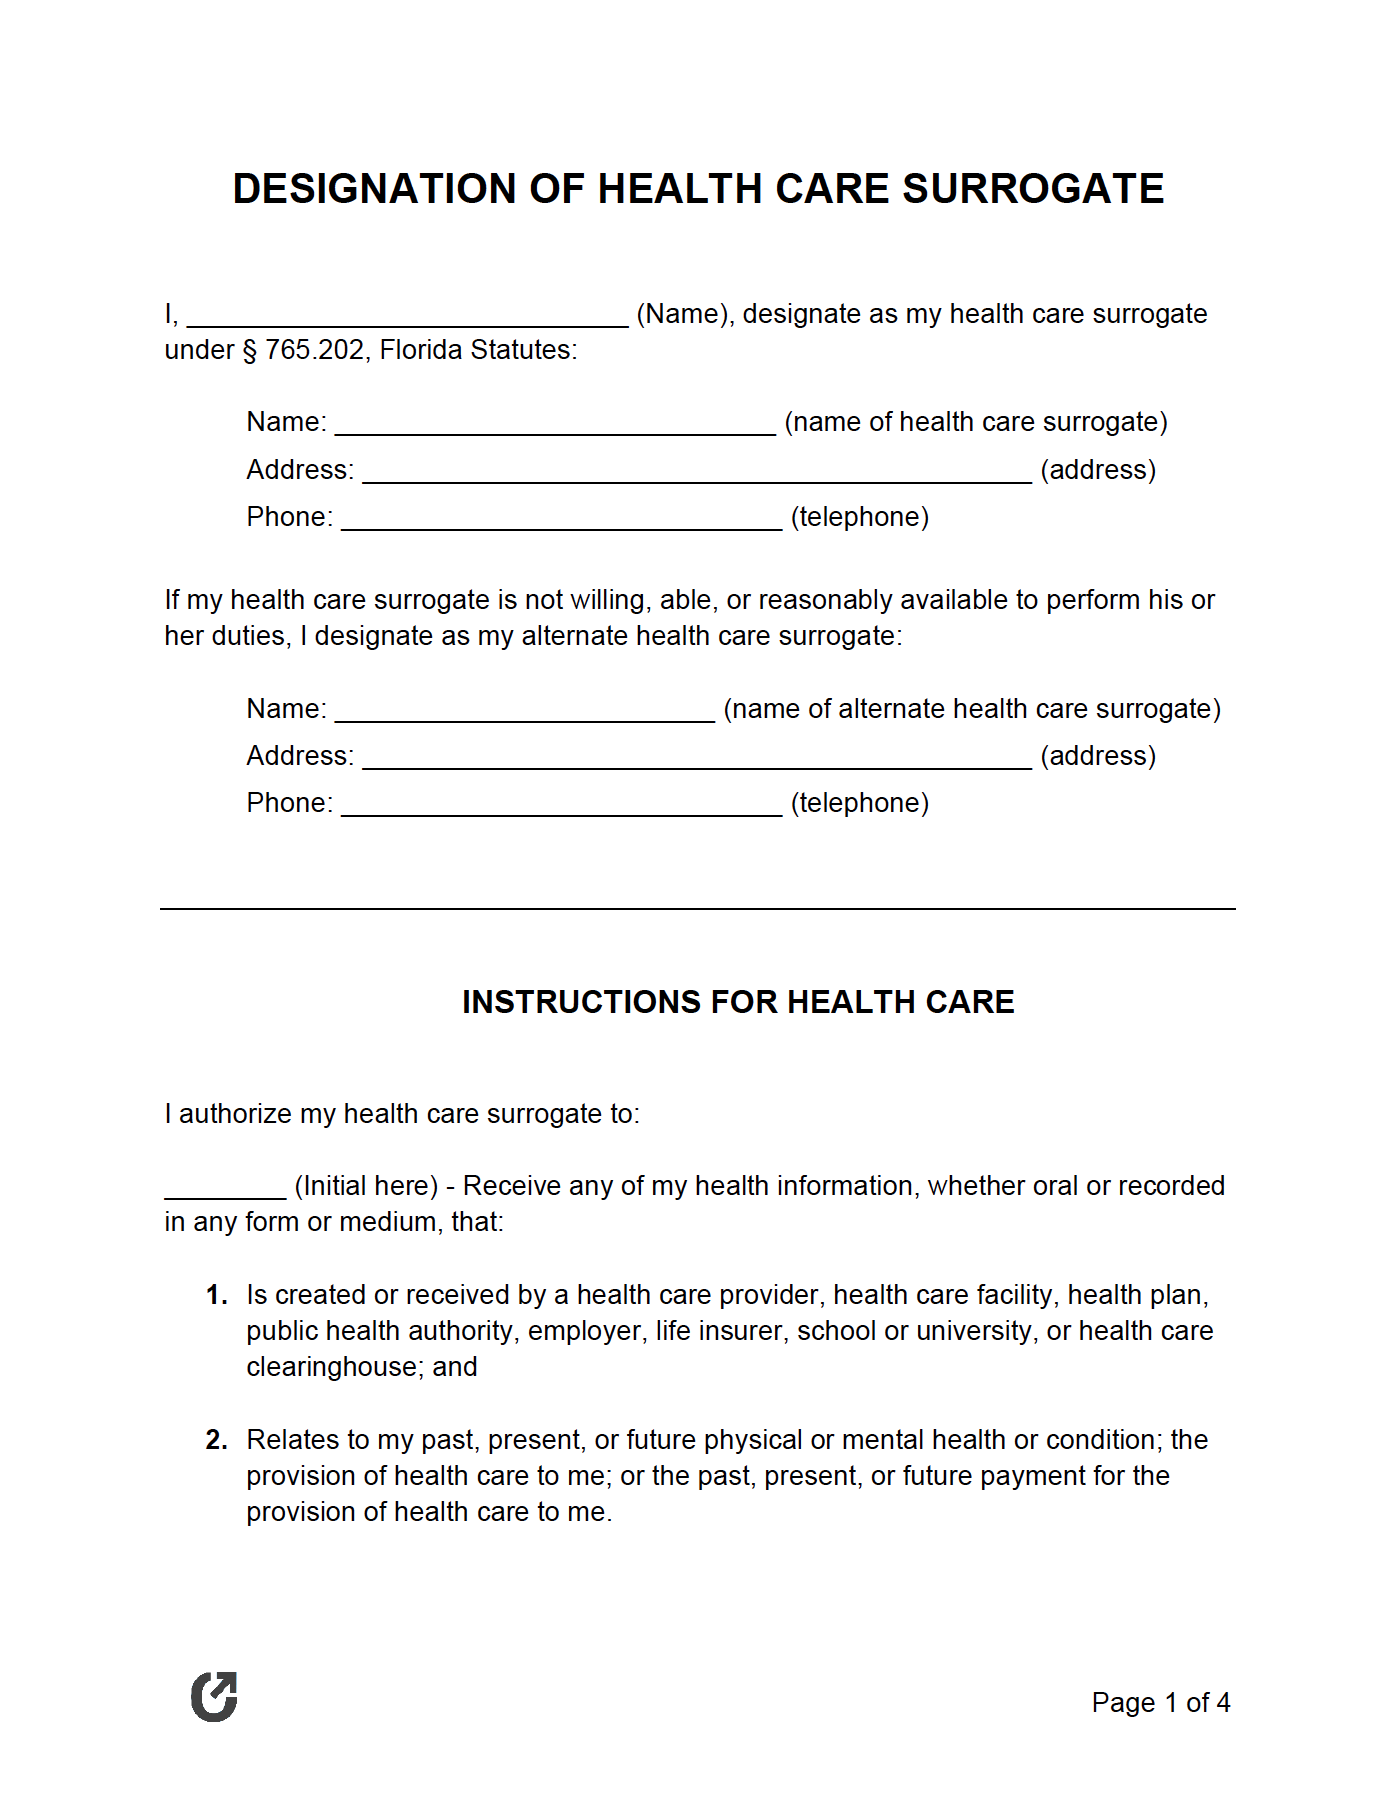 free-florida-designation-of-health-care-surrogate-form-pdf-word-rtf